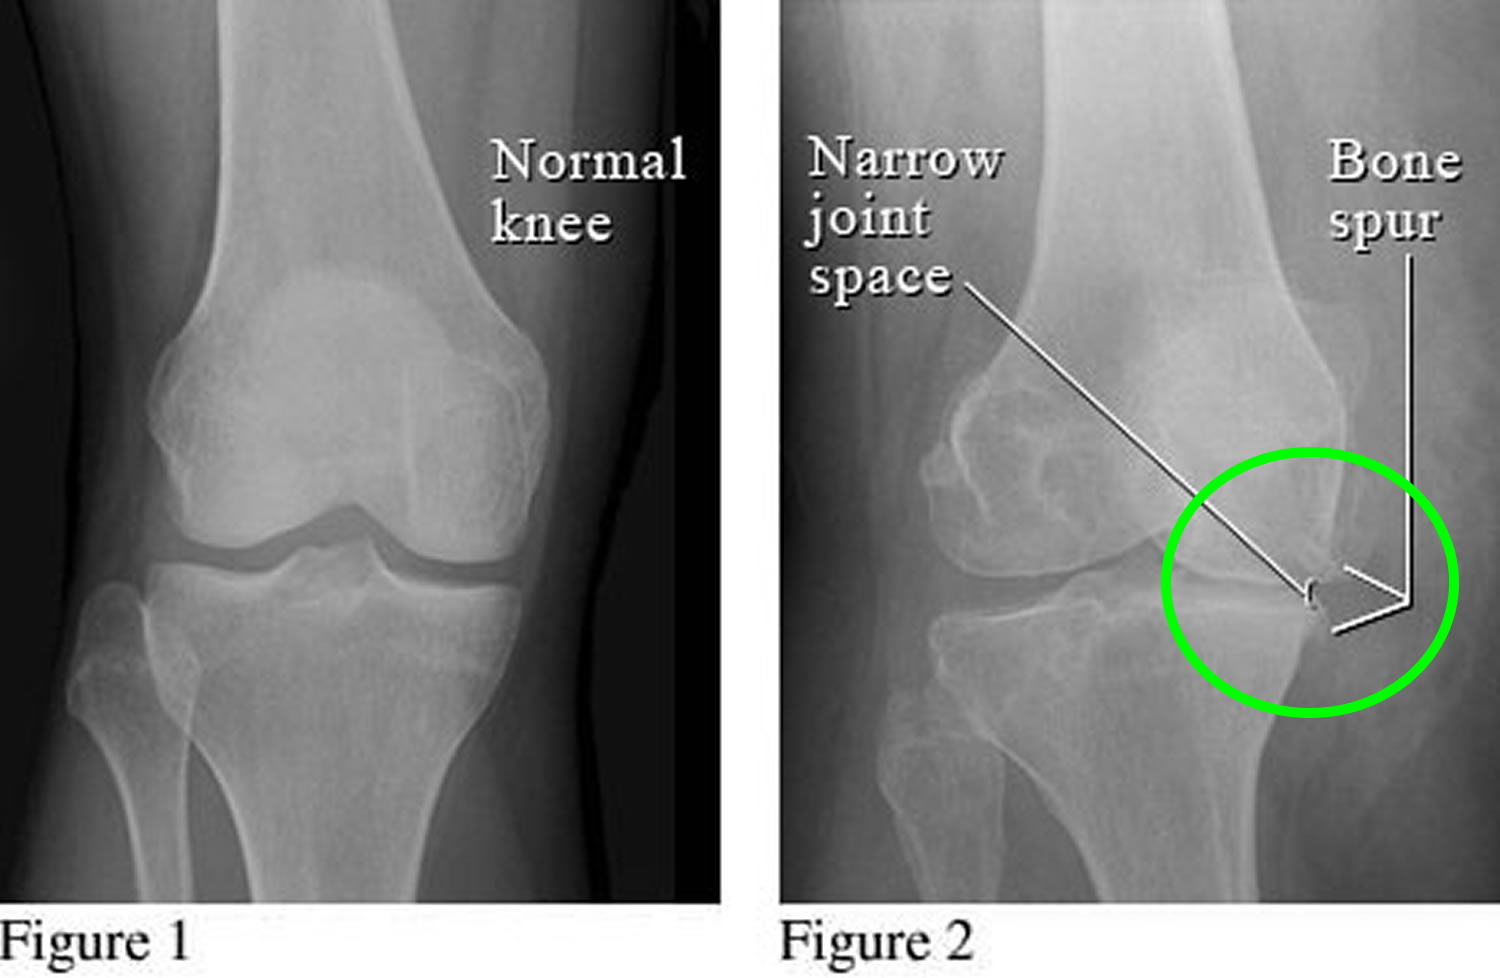 bone spur knee.